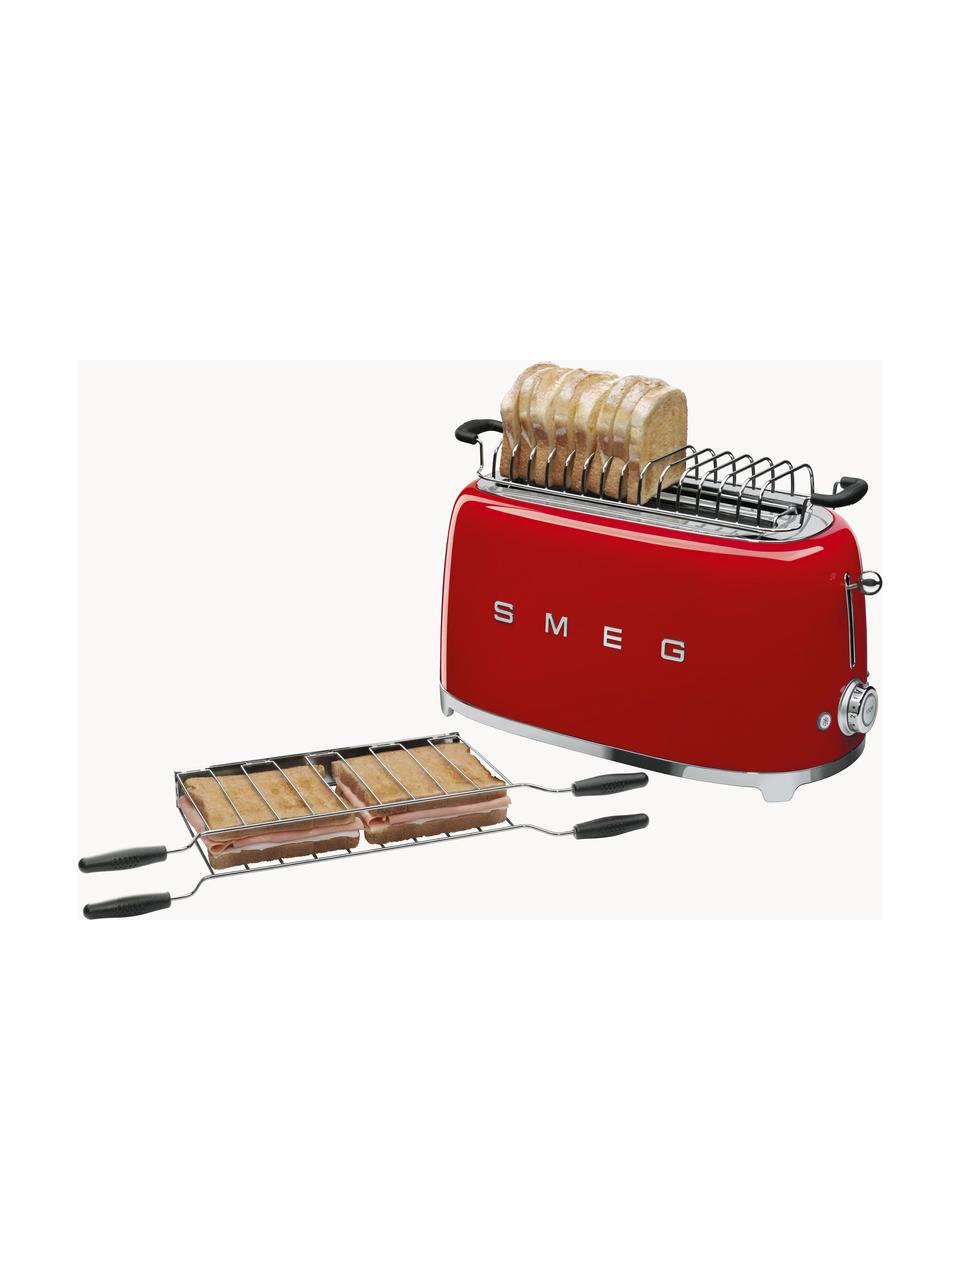 Broodrooster 50's Style met lange sleuf, Gelakt edelstaal, Glanzend rood, B 41 x D 21 cm